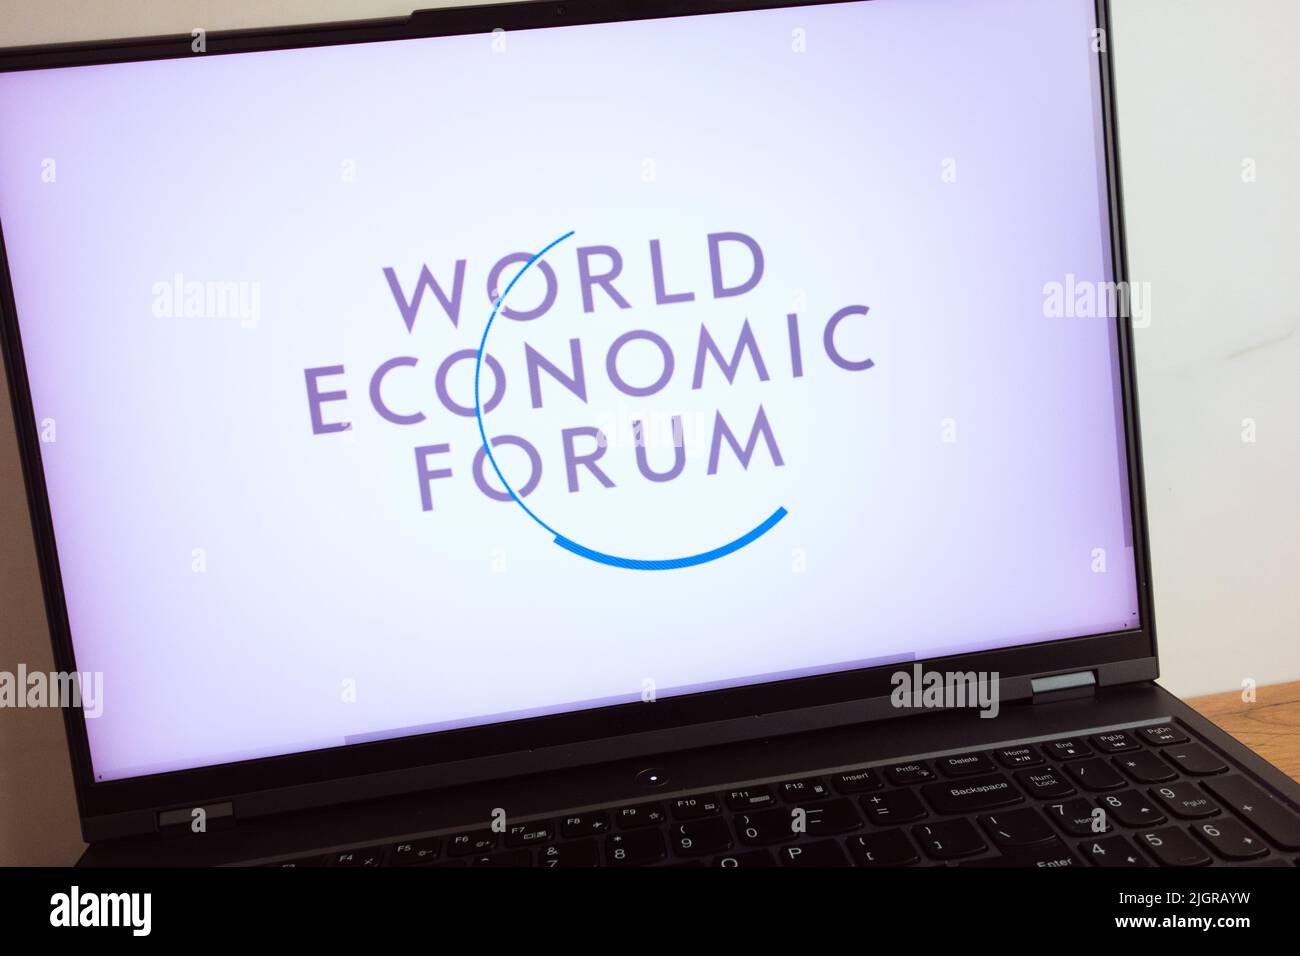 KONSKIE, POLAND - July 11, 2022: The World Economic Forum logo displayed on laptop computer screen Stock Photo